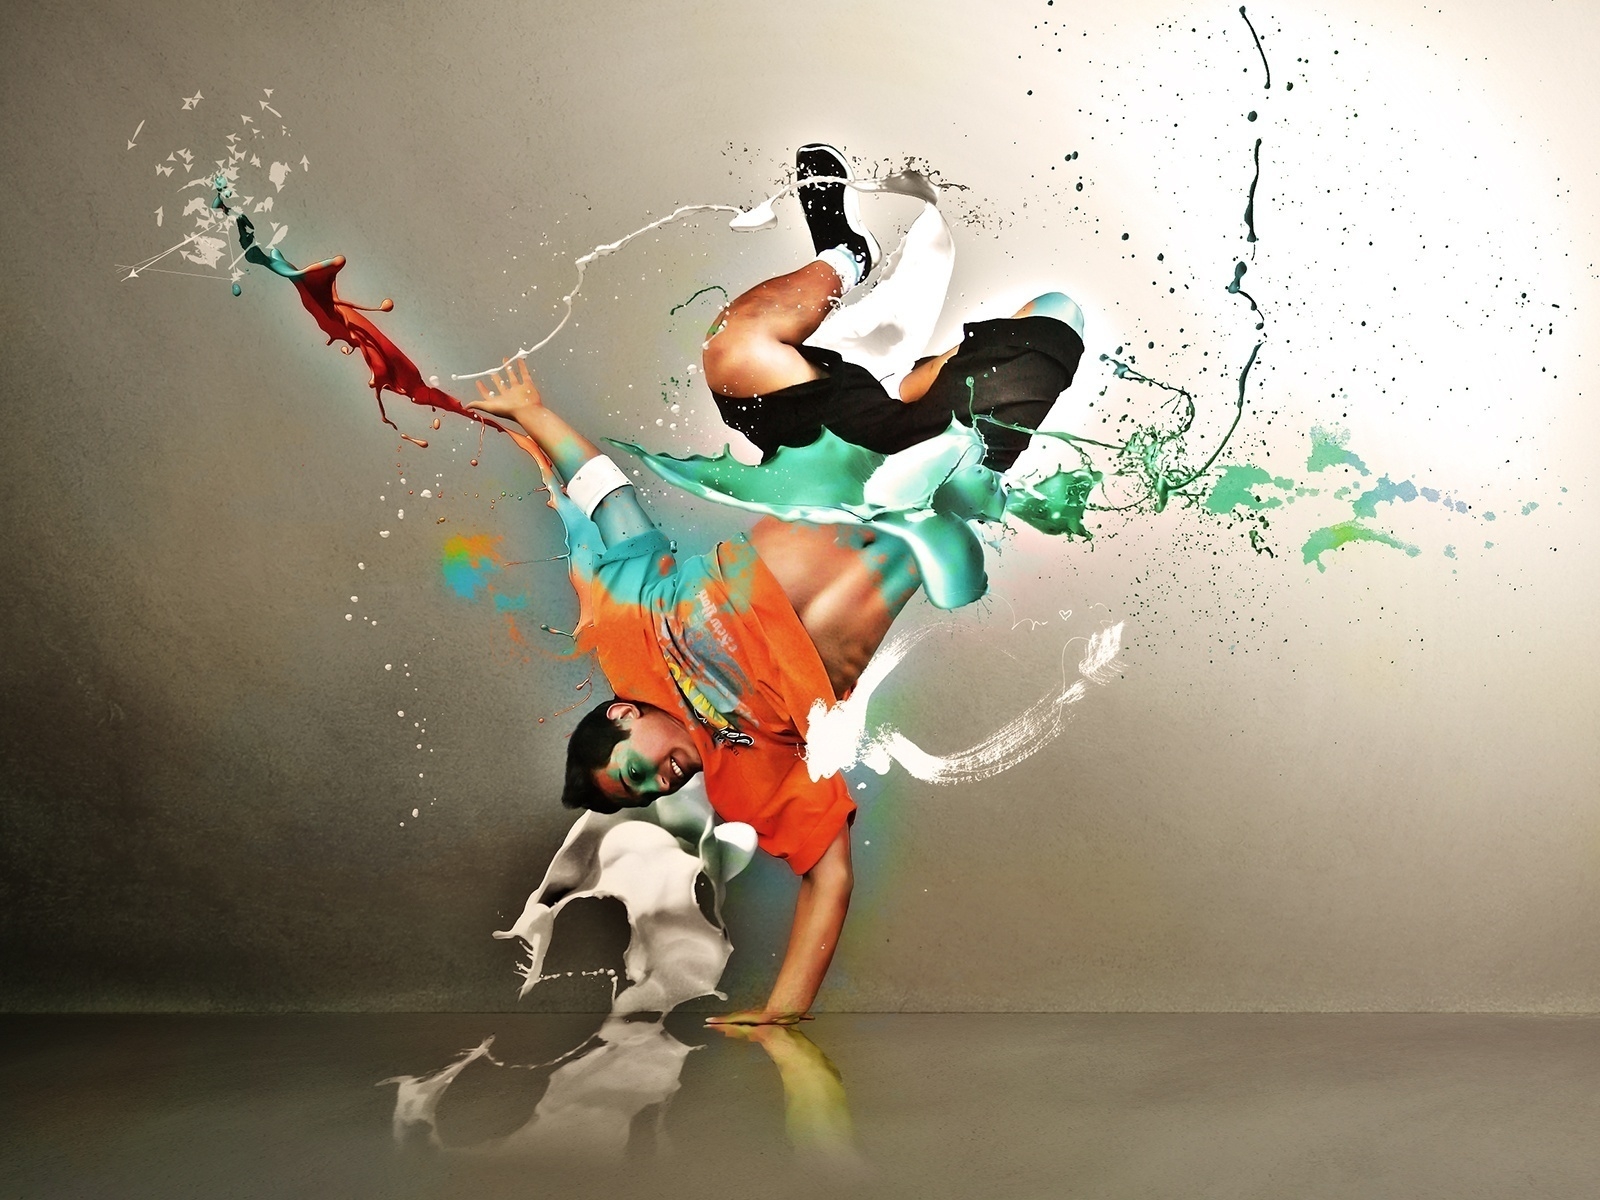 Breakdancer for 1600 x 1200 resolution